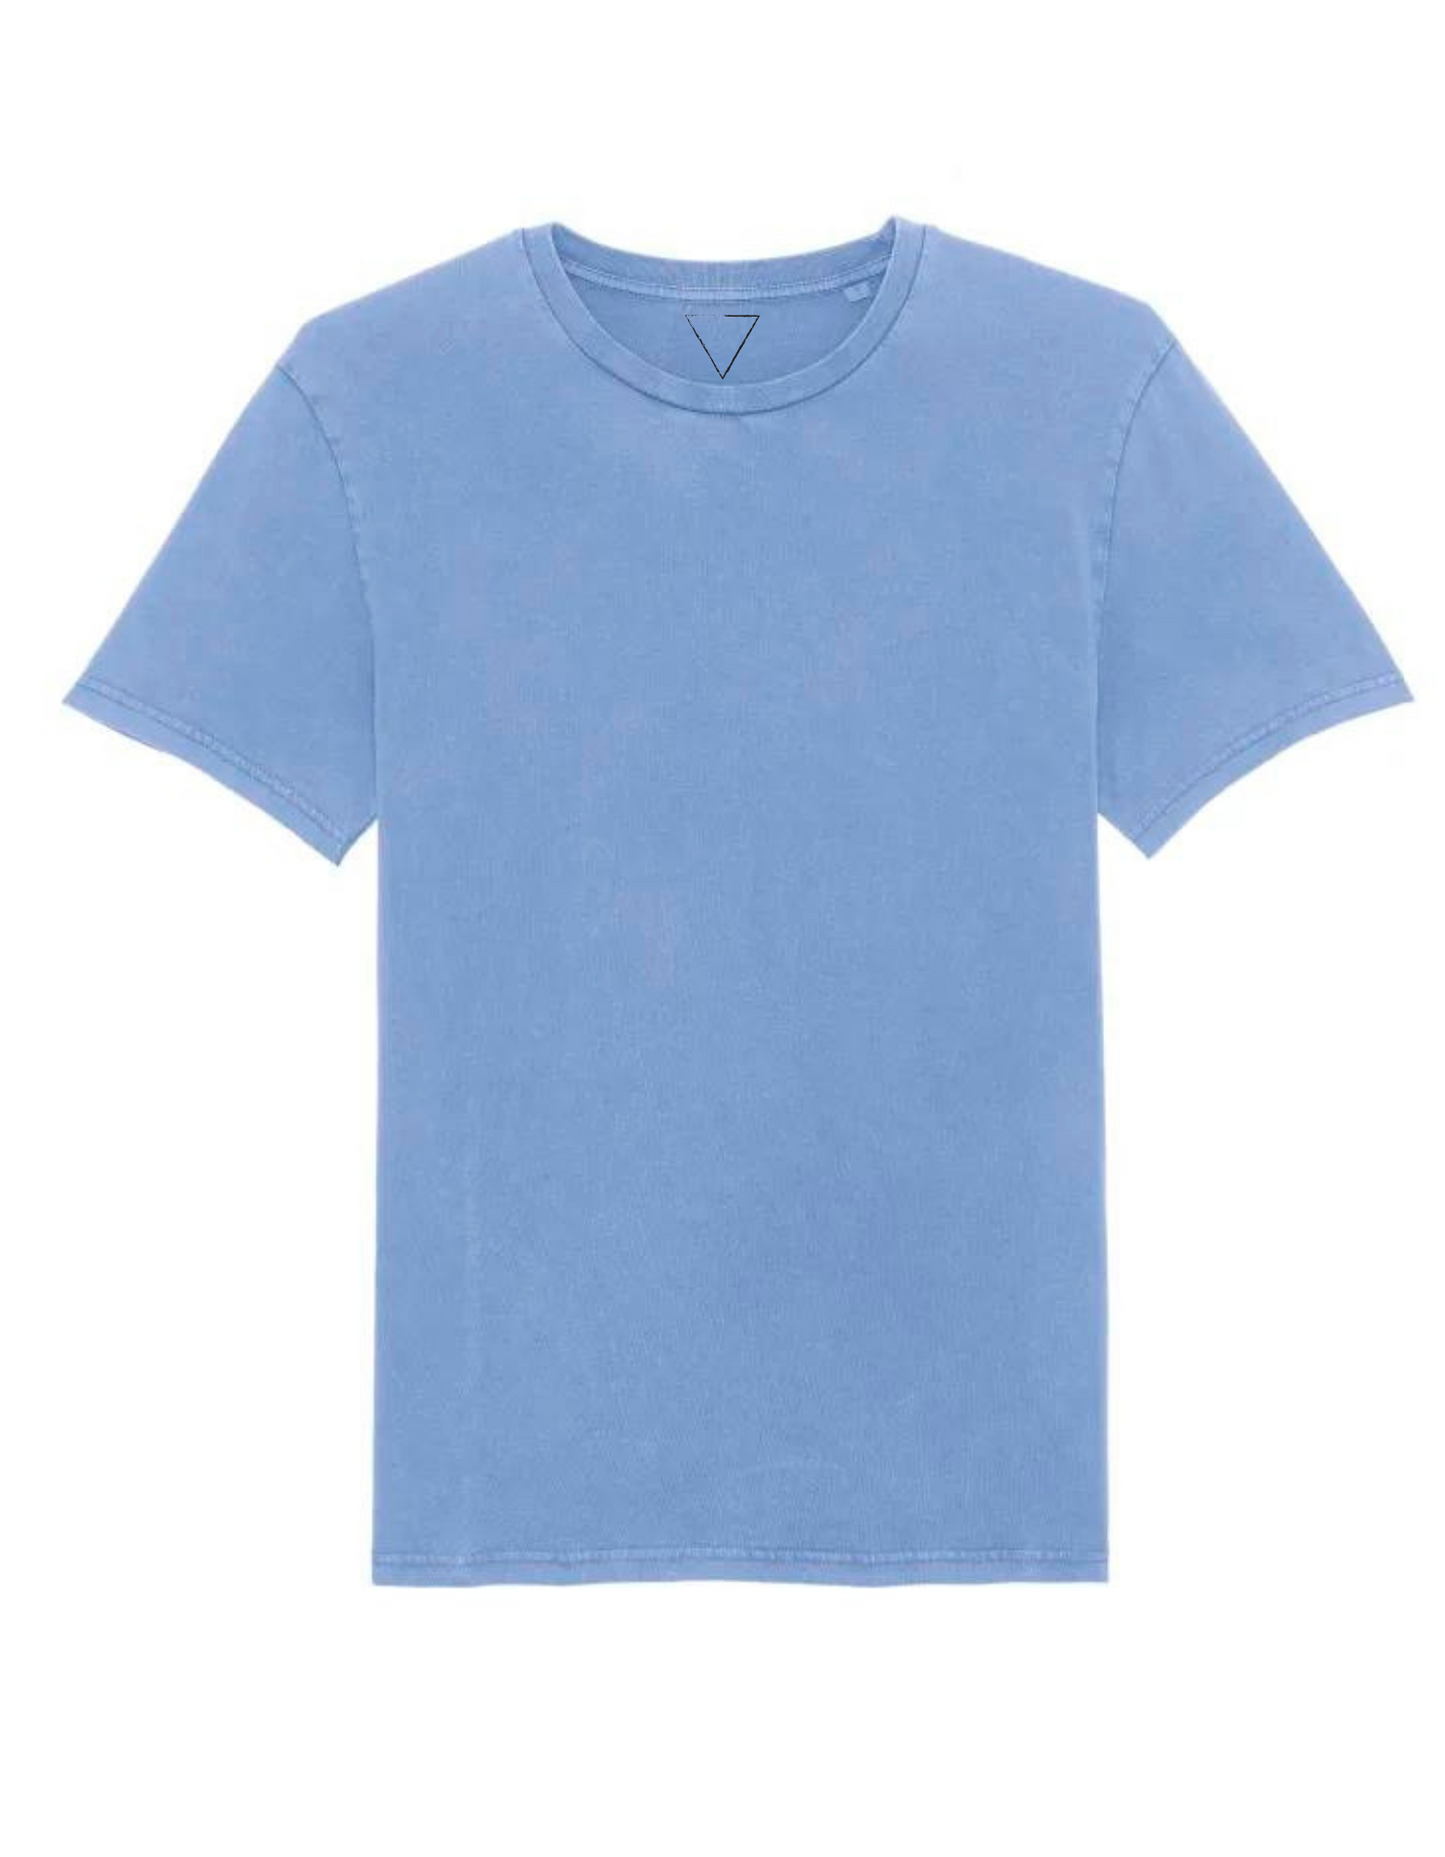 Essential dyed | T-shirt tingida